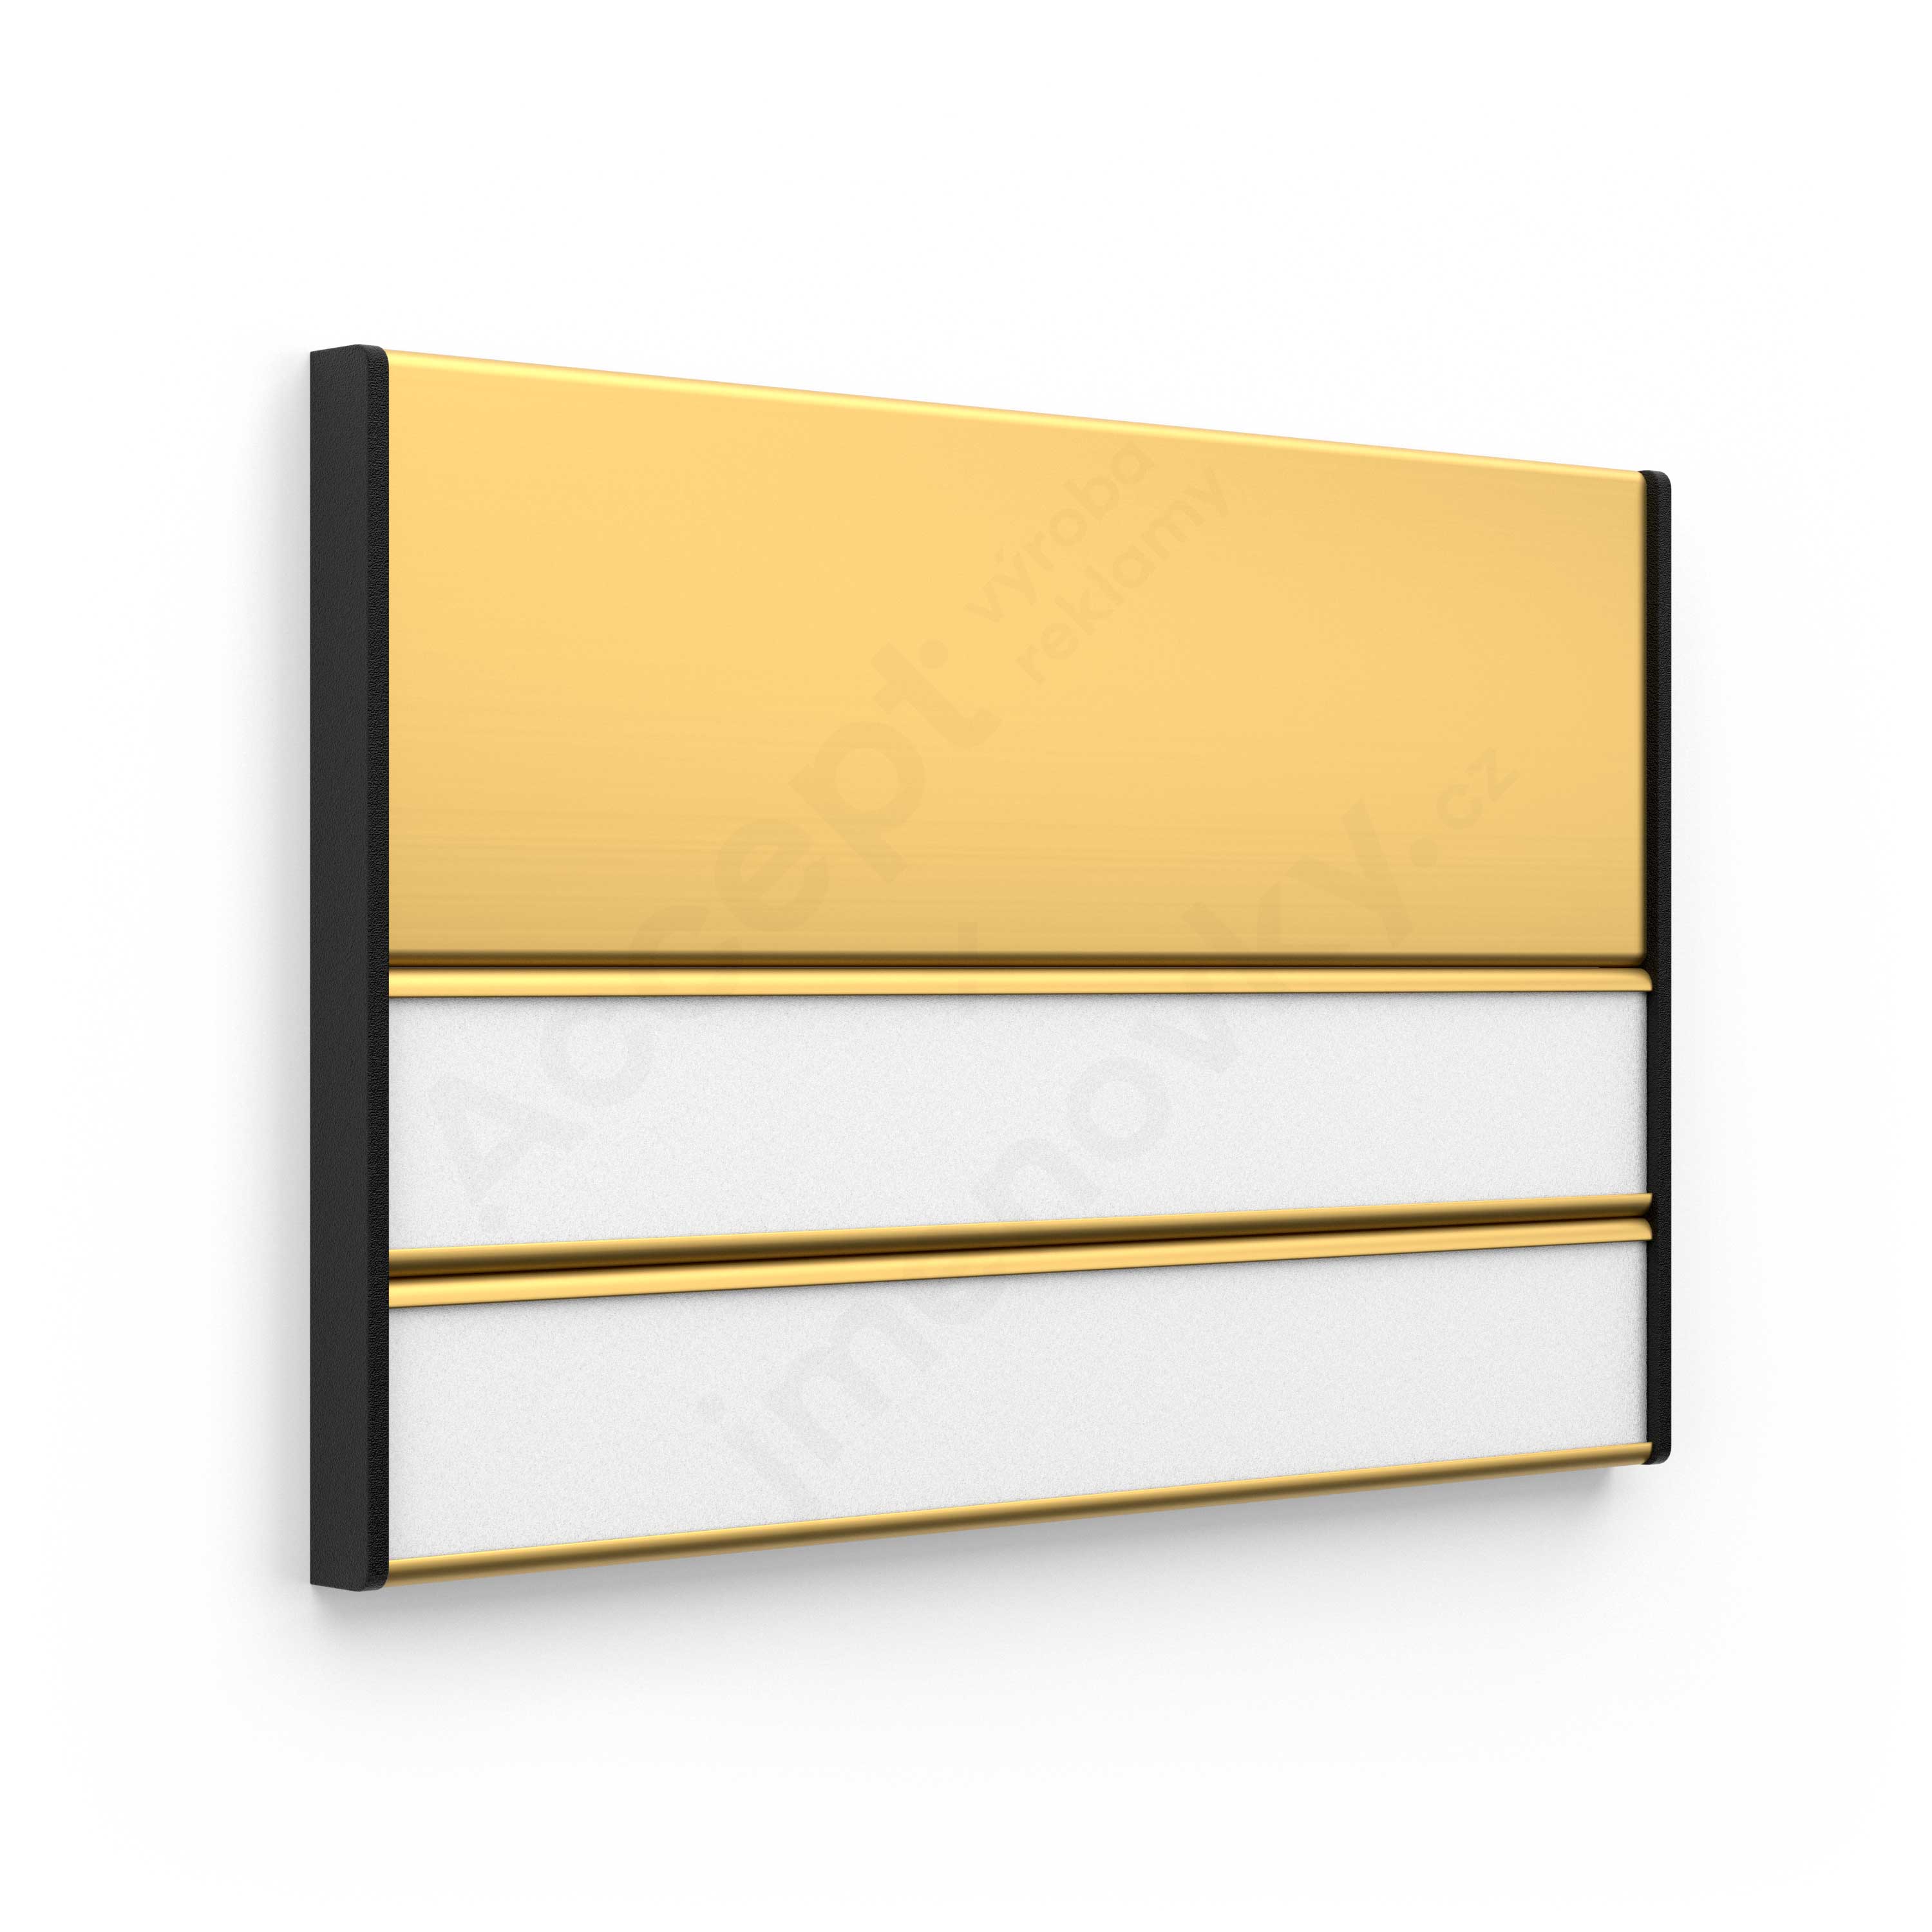 Dveřní tabulka ACS zlatá (kombinovaný systém, 187 x 125 mm)